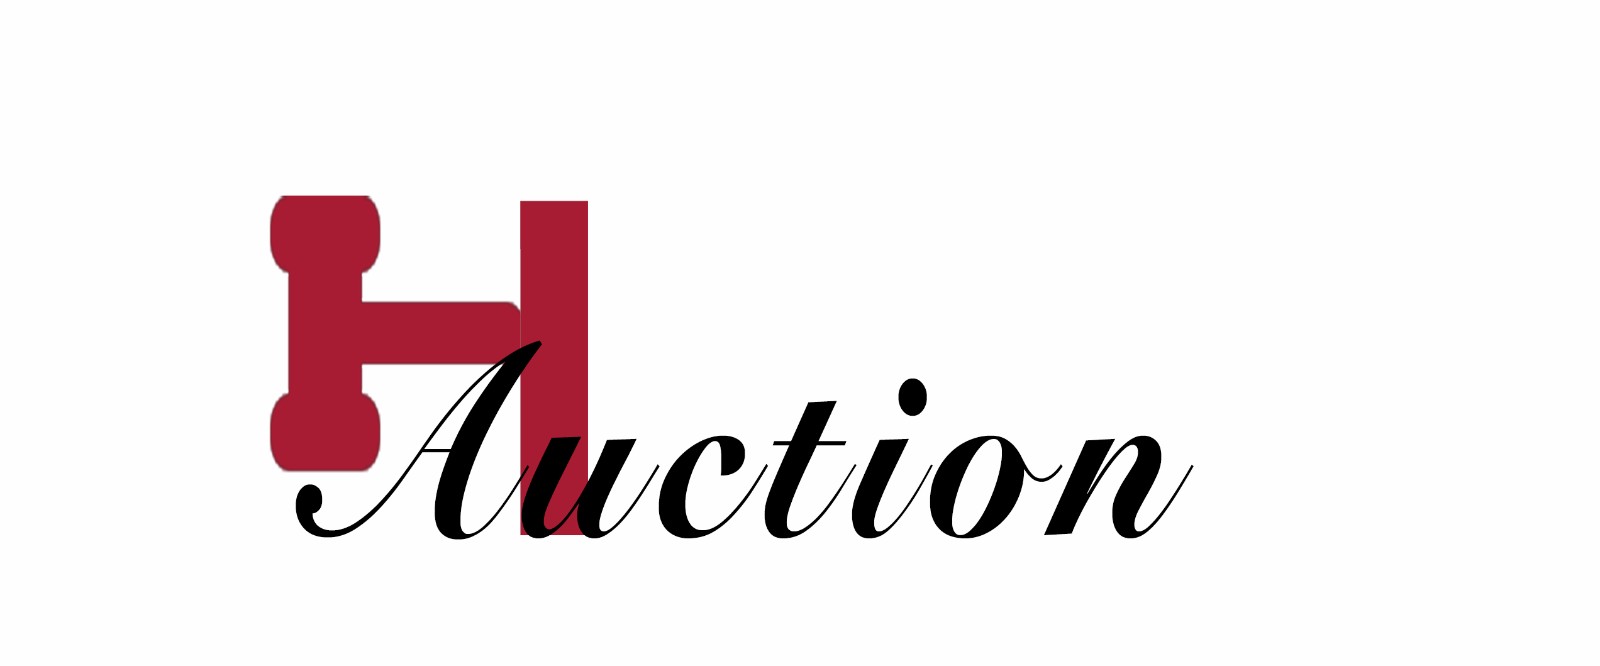 Harvard's Auction